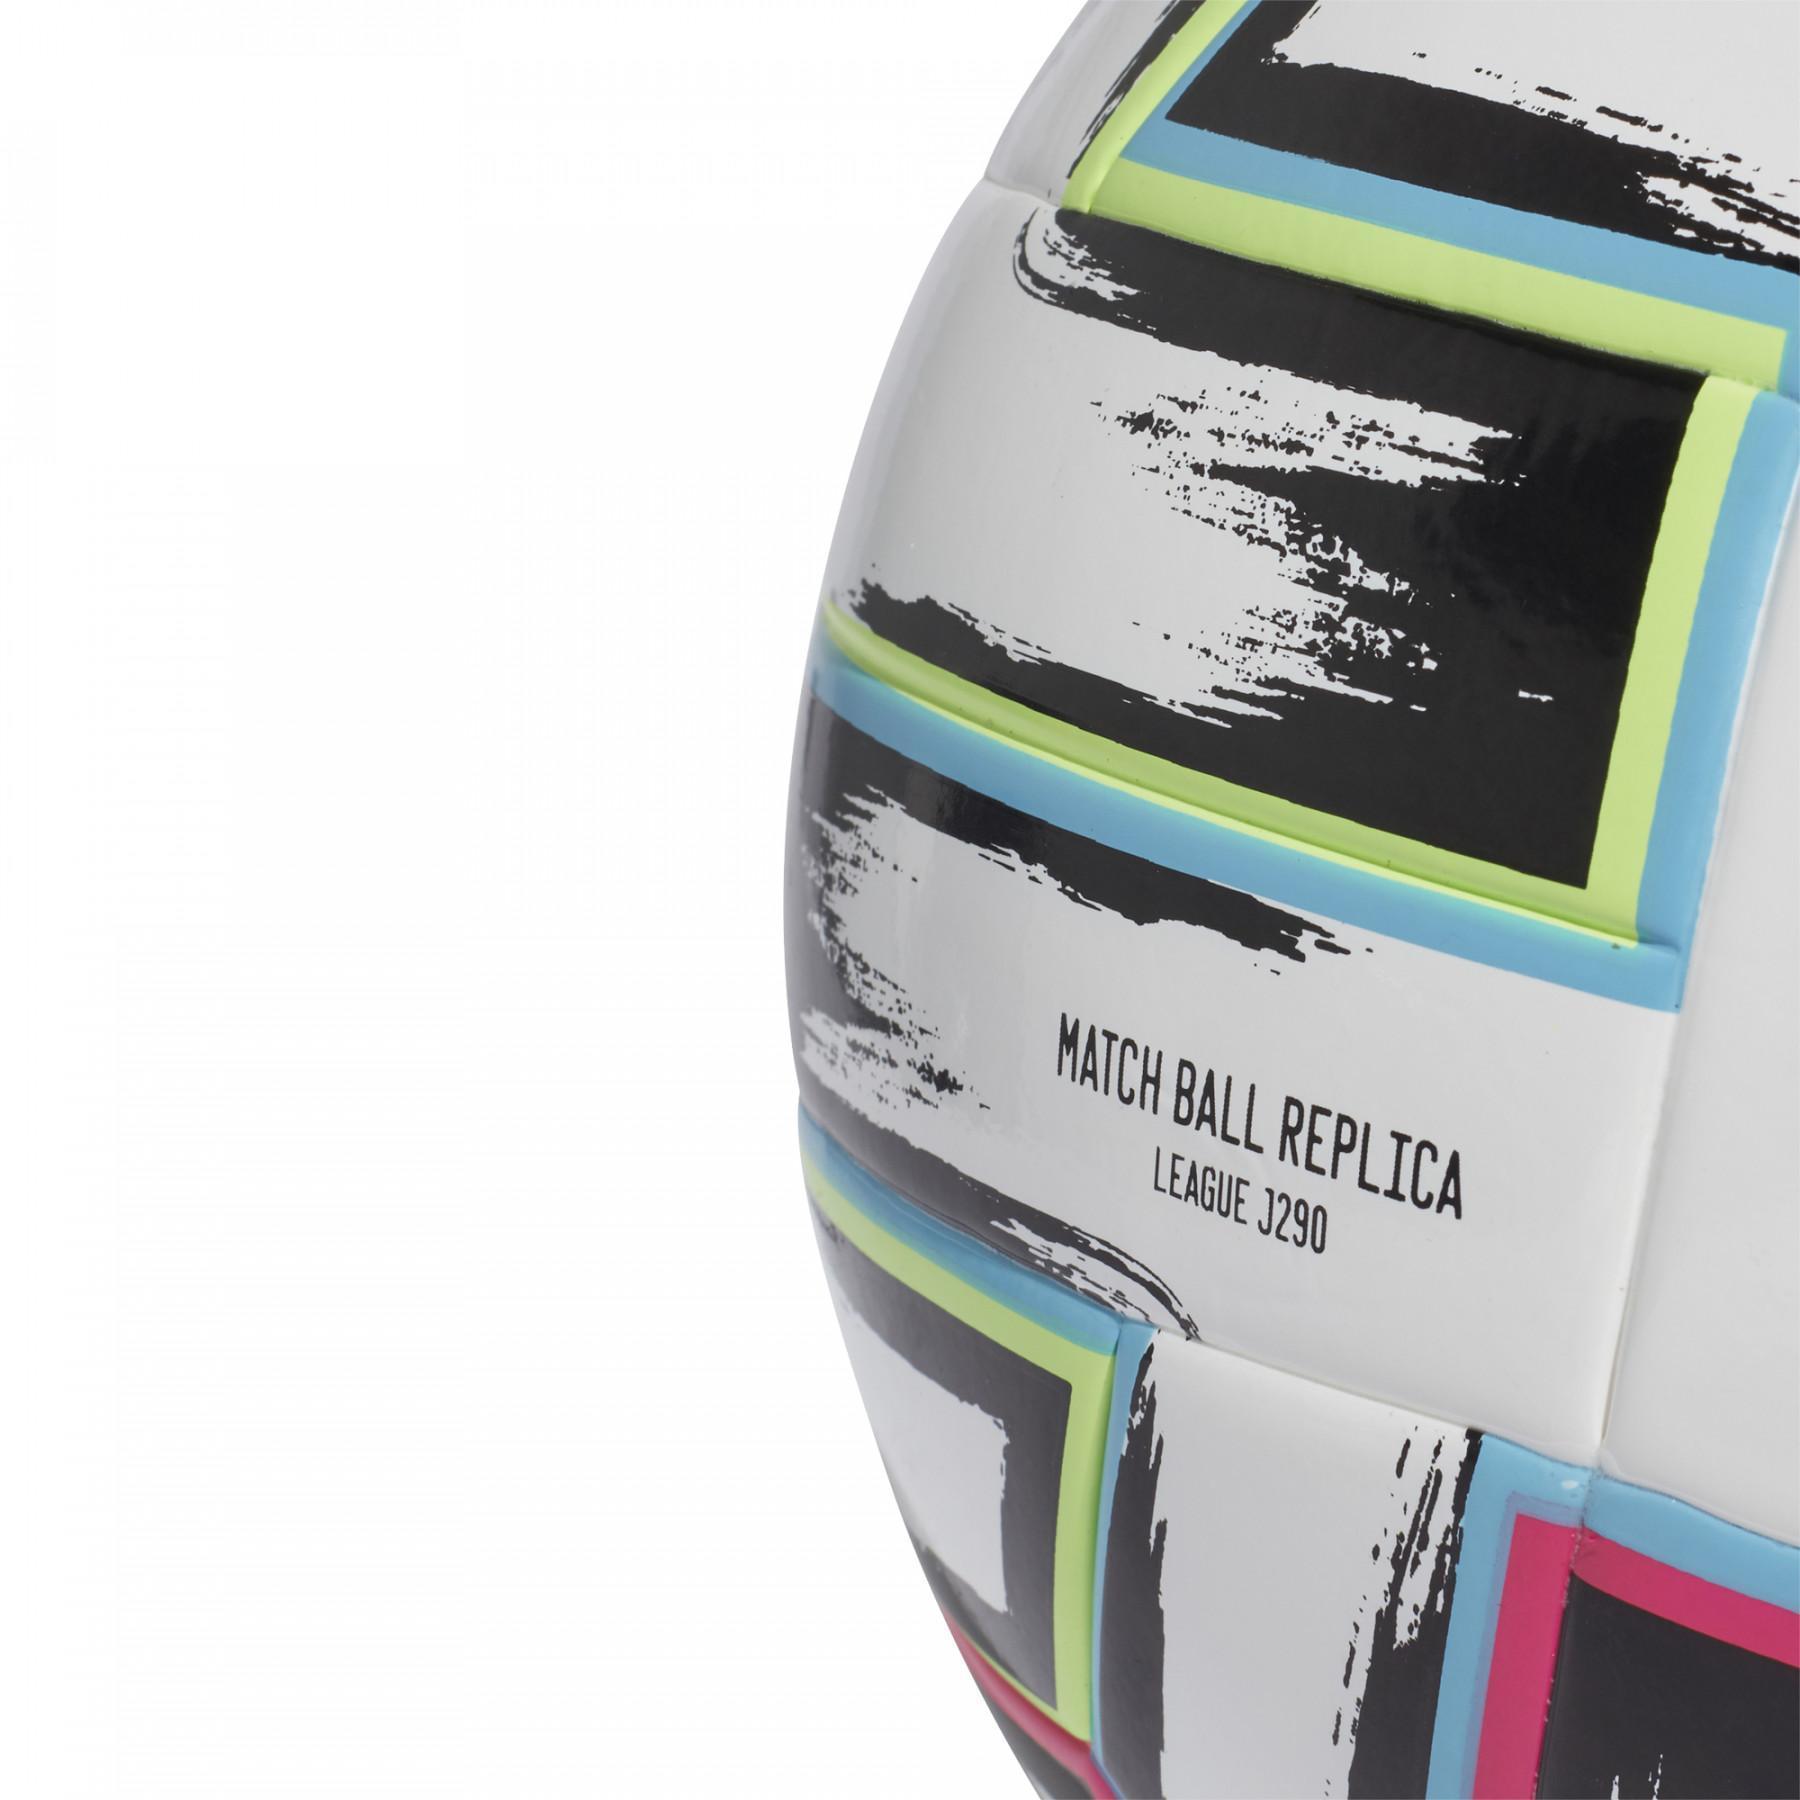 Kinderbal adidas Uniforia League J290